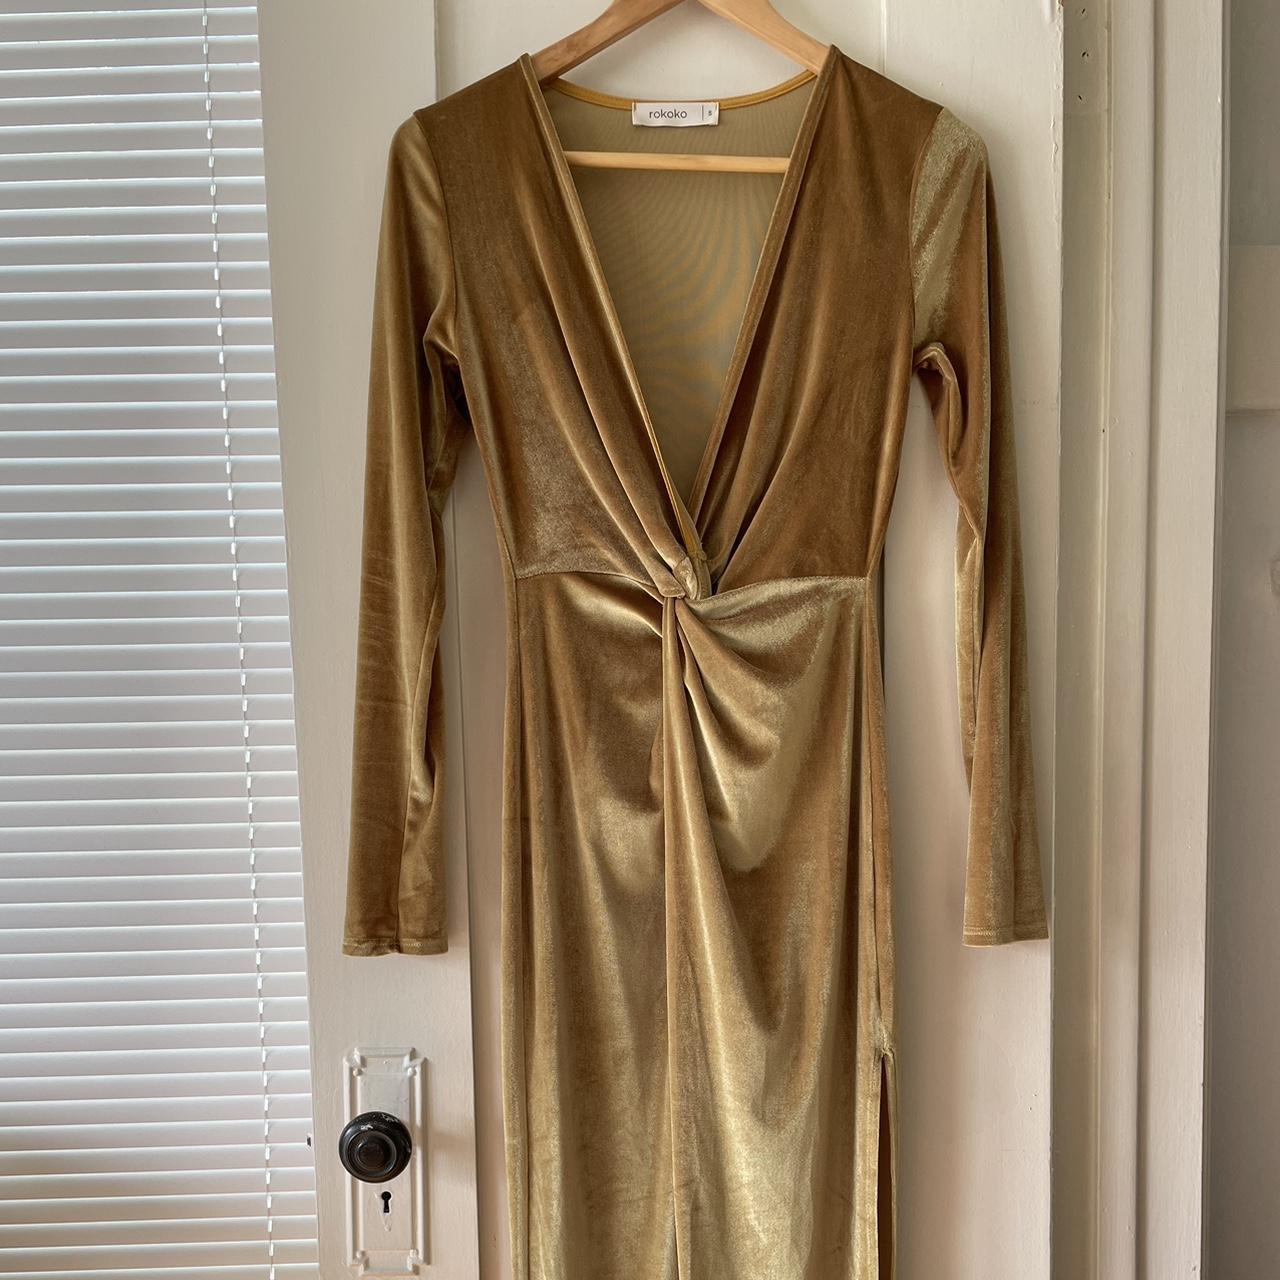 Rokoko Women's Gold Dress